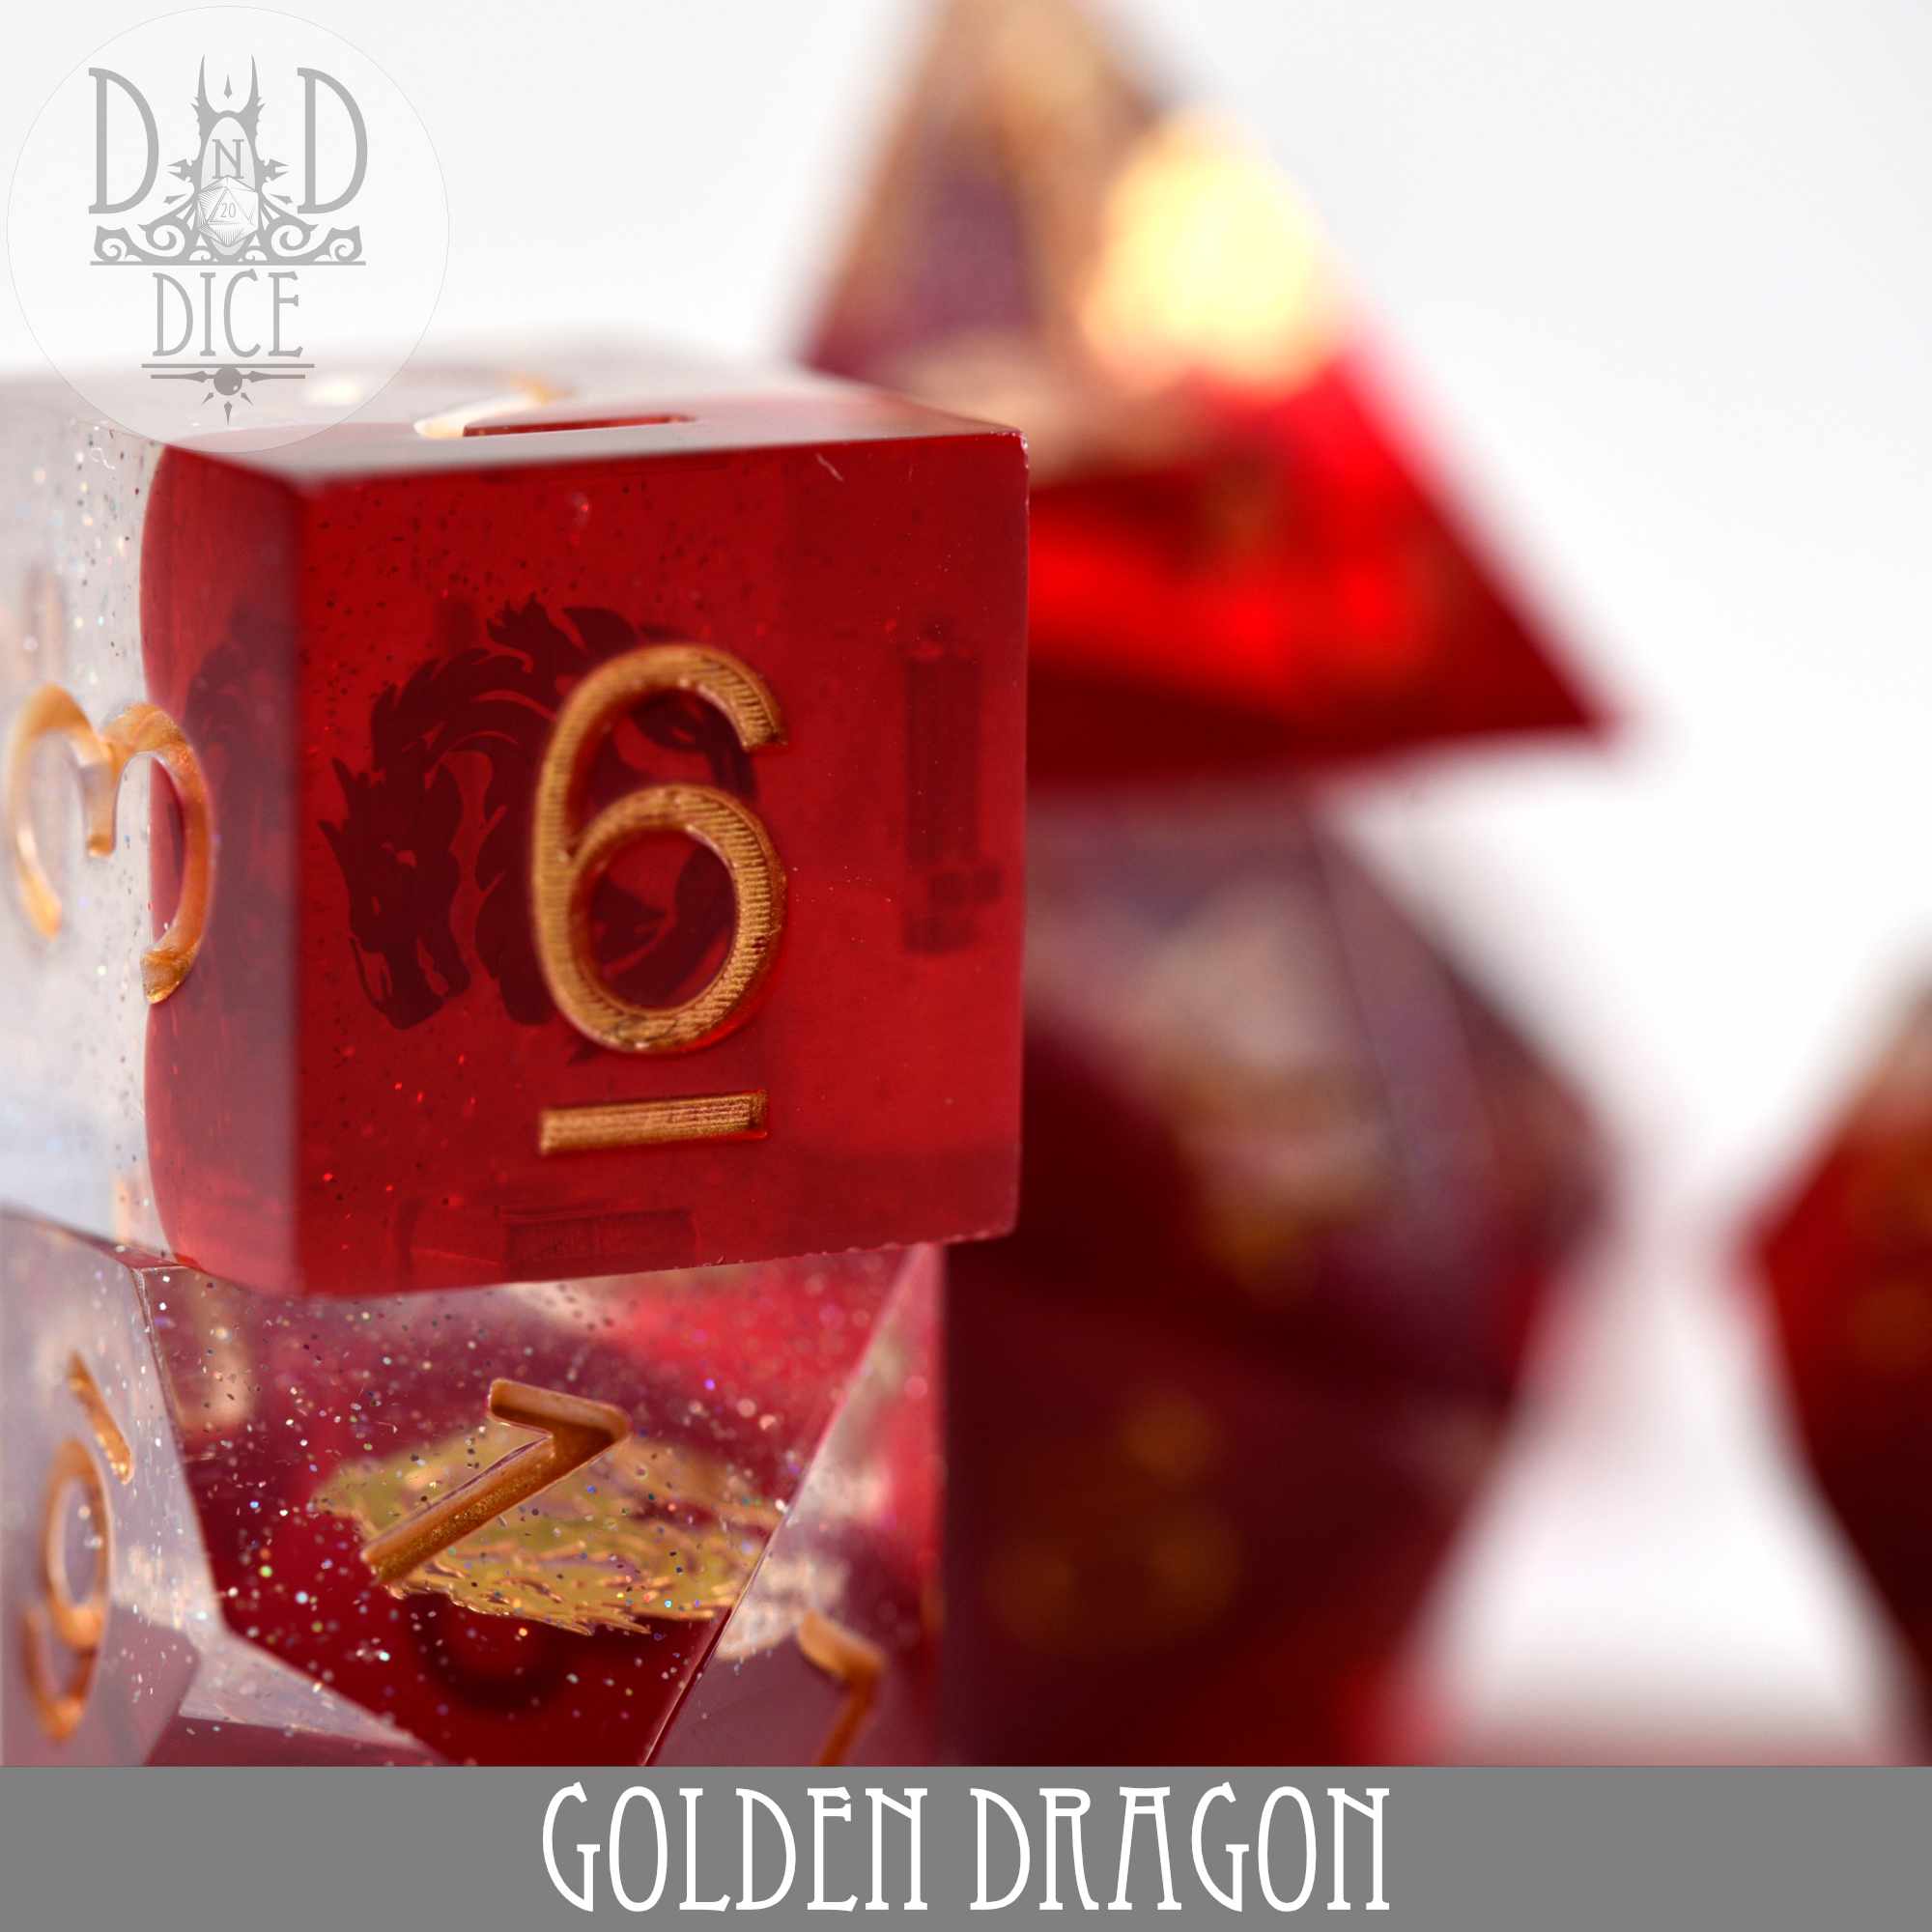 Golden Dragon Handmade Dice Set